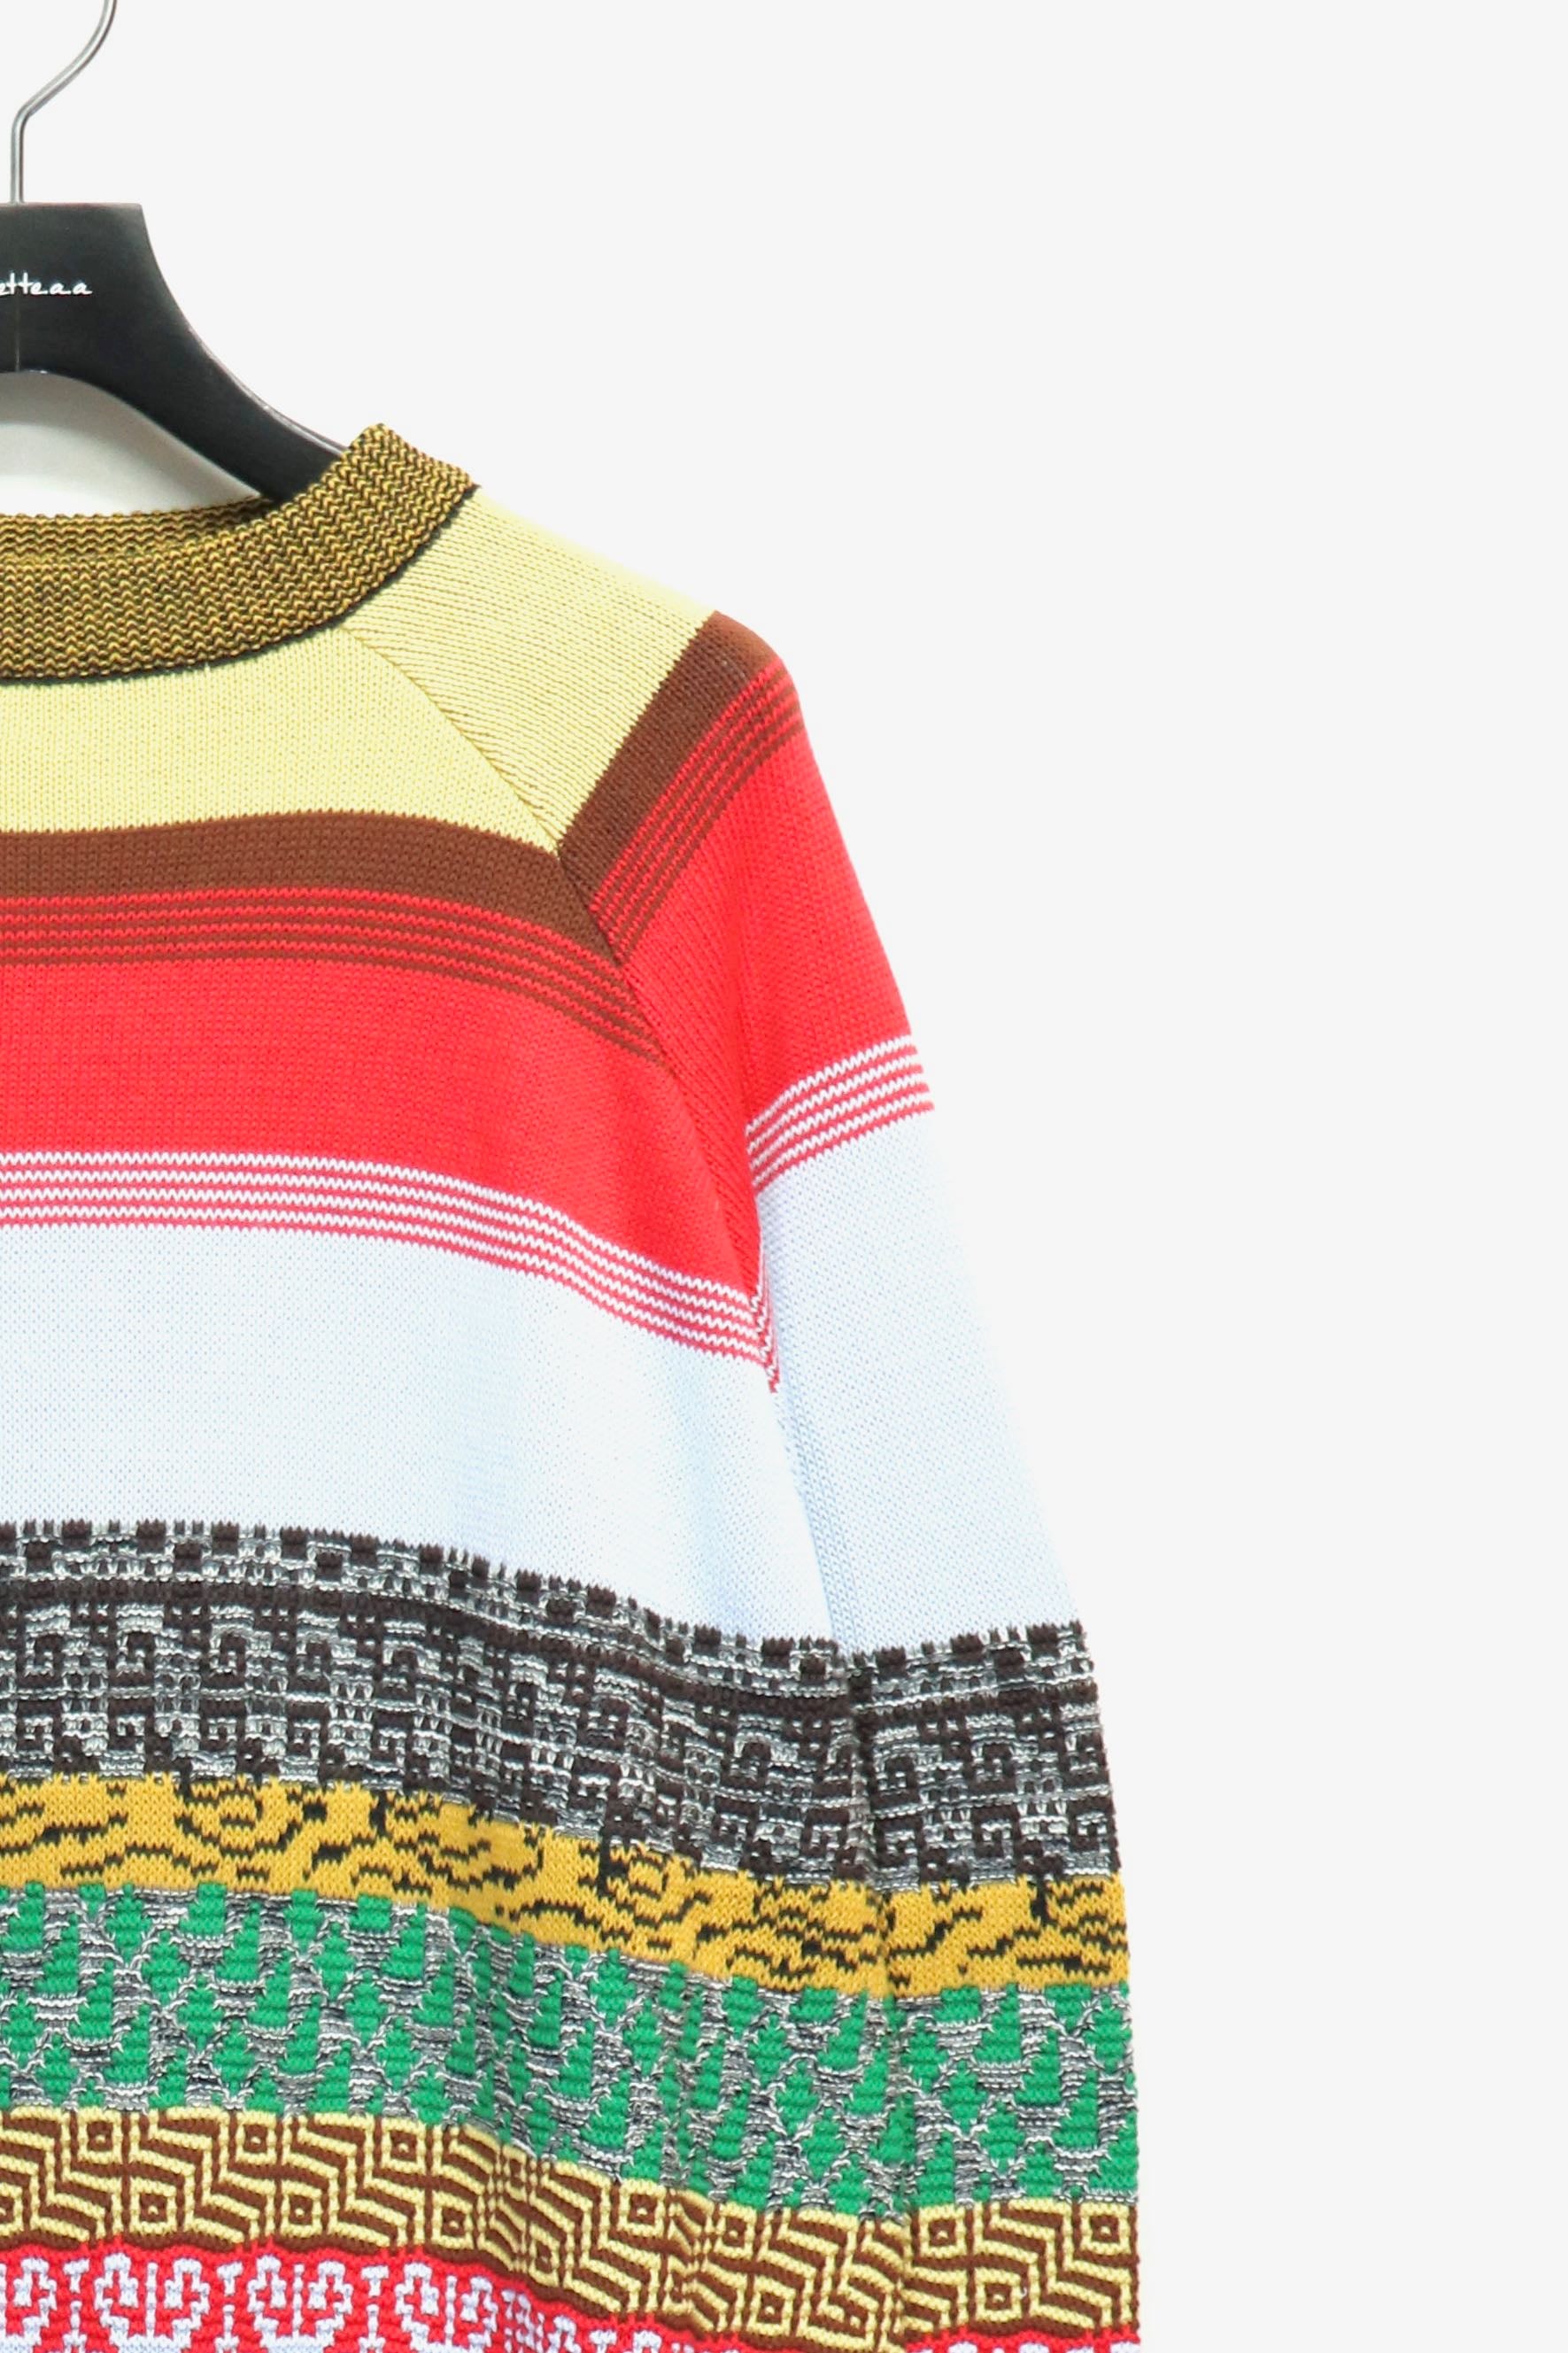 TOGA VIRILIS(トーガ ビリリース)23ssのJacquard knit pulloverの通販 